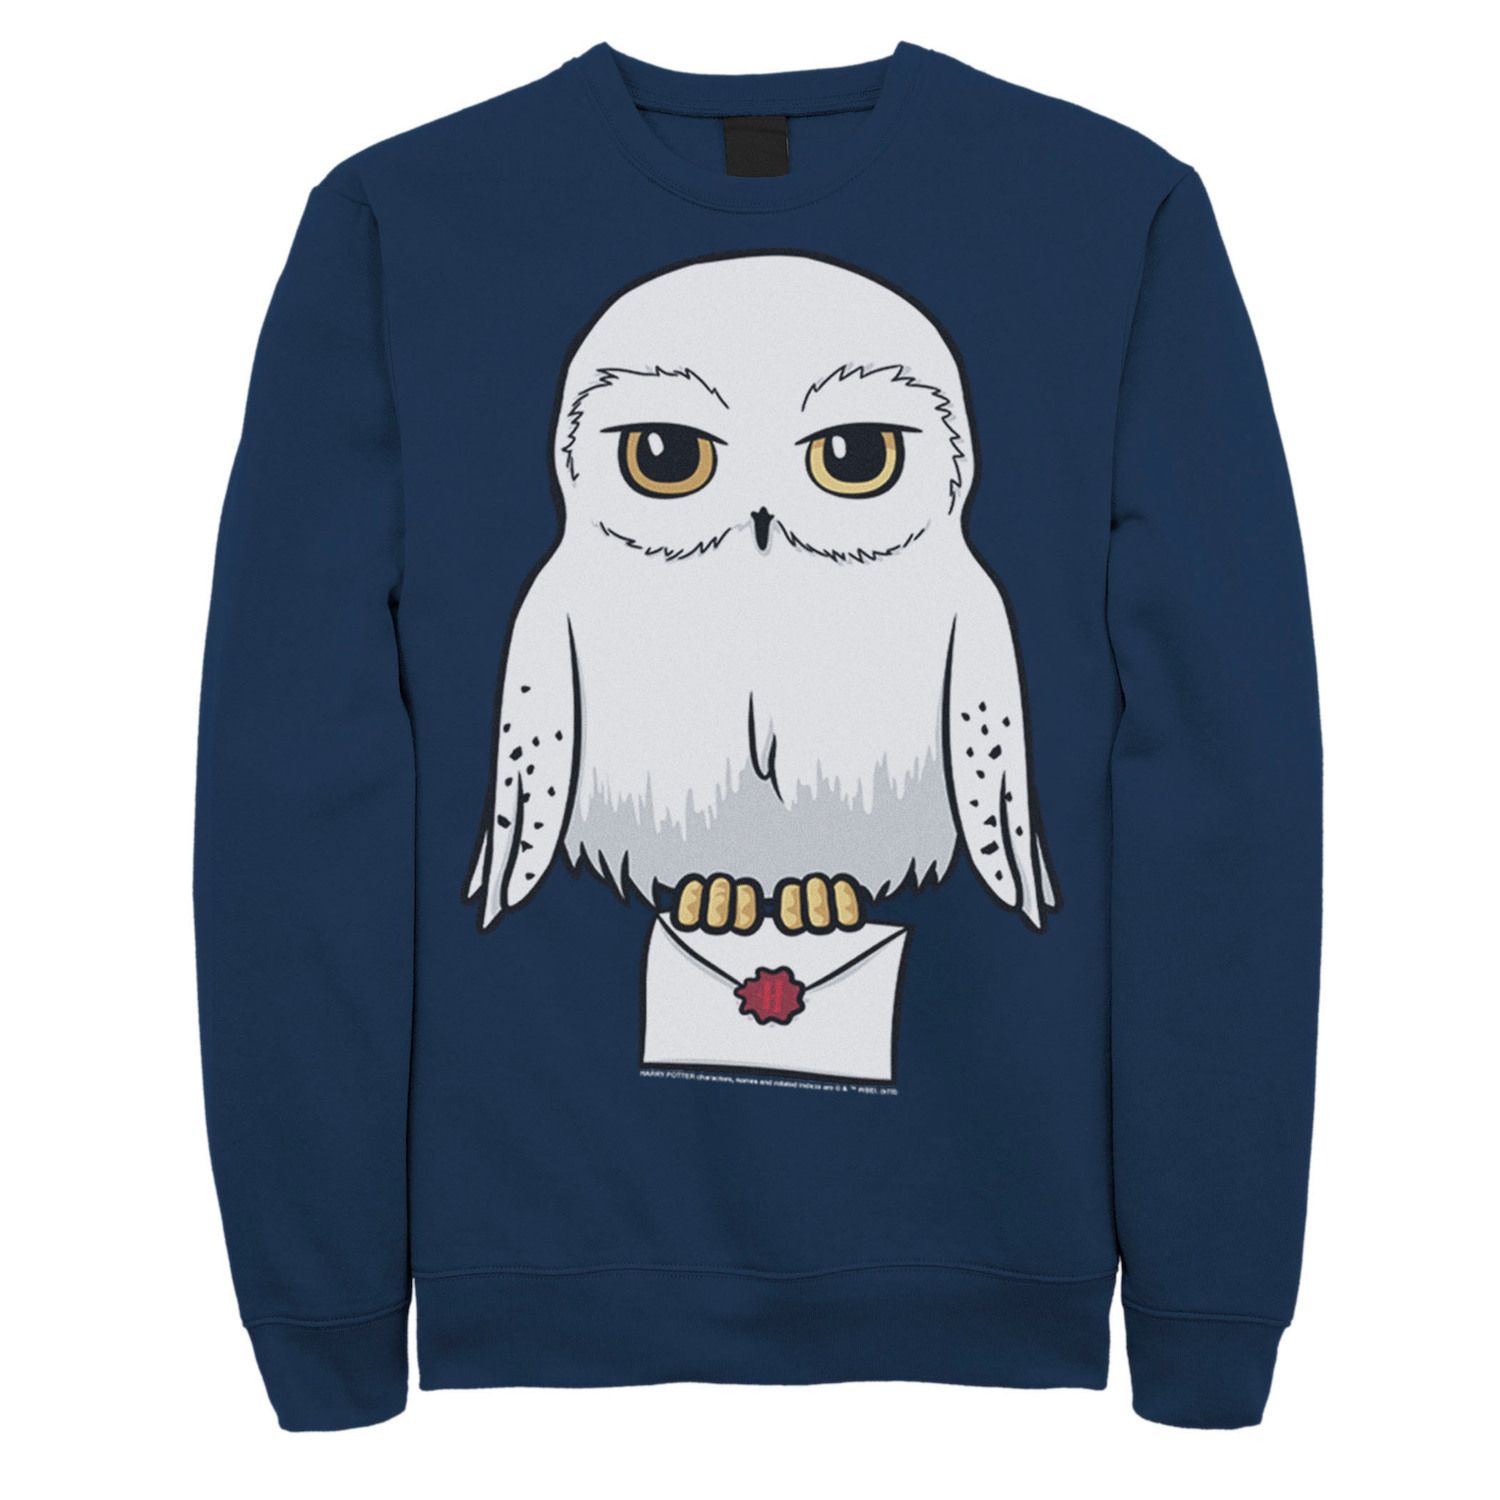 Image for Harry Potter Men's Hedwig Cute Cartoon Portrait Sweatshirt at Kohl's.